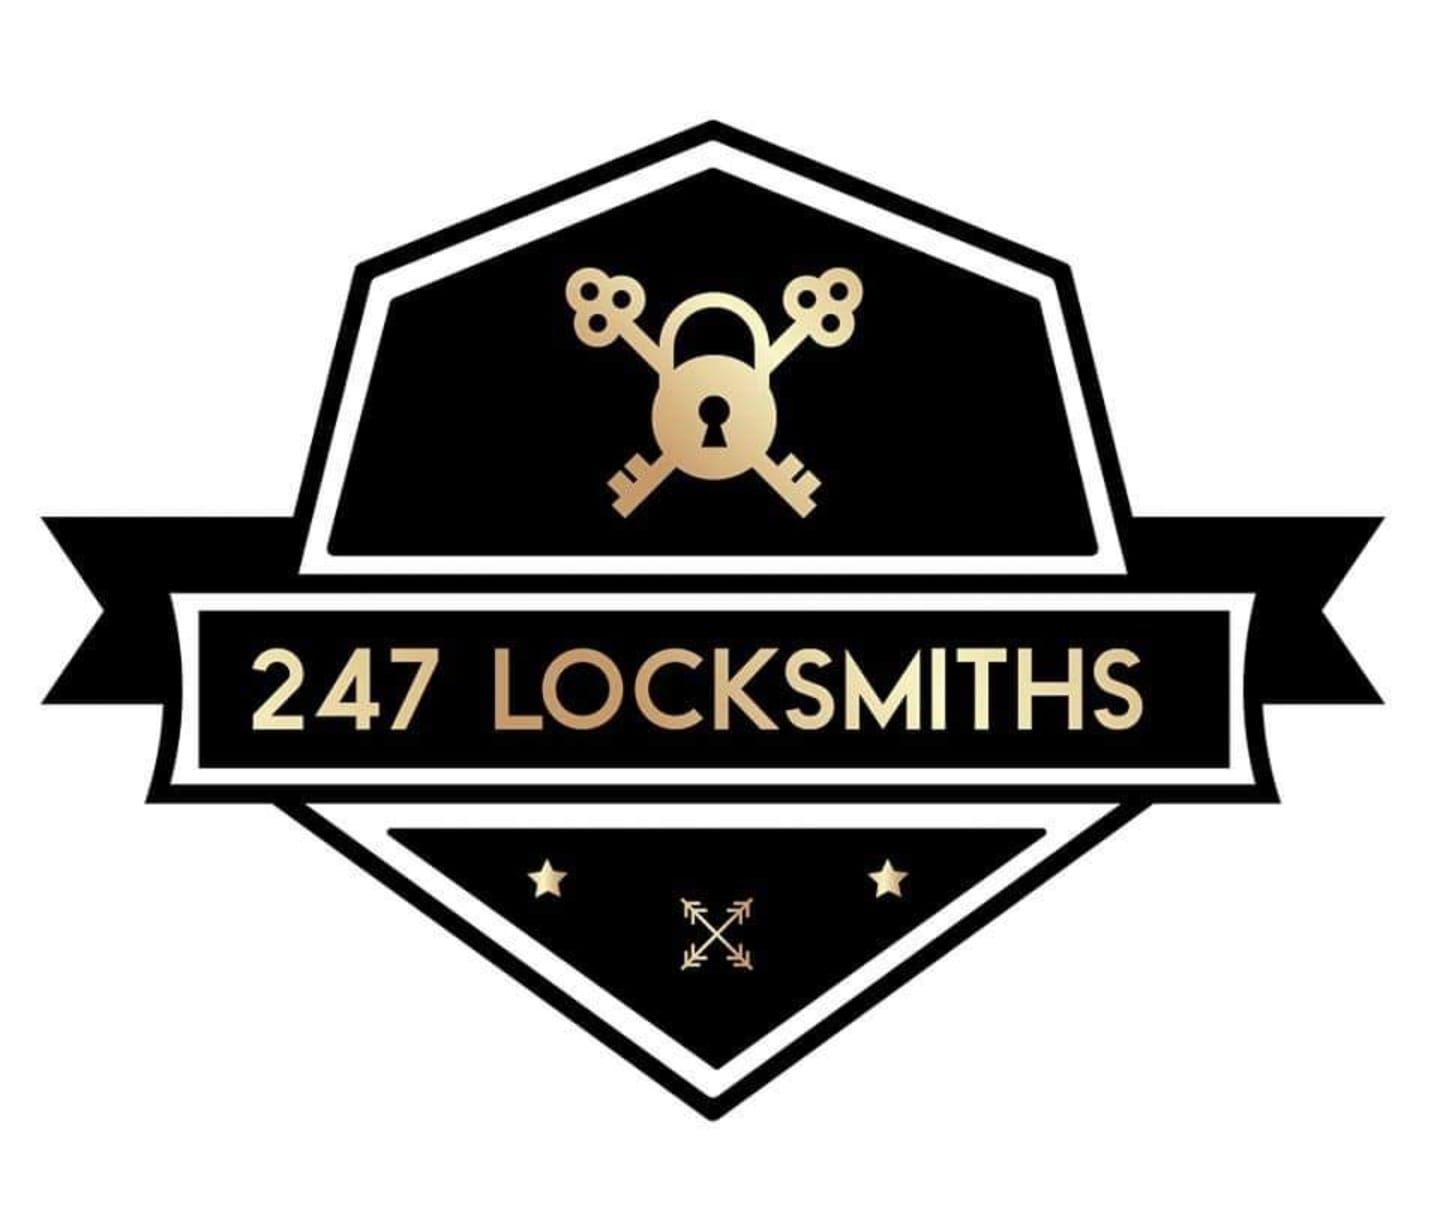 Experienced Locksmith in Altrincham